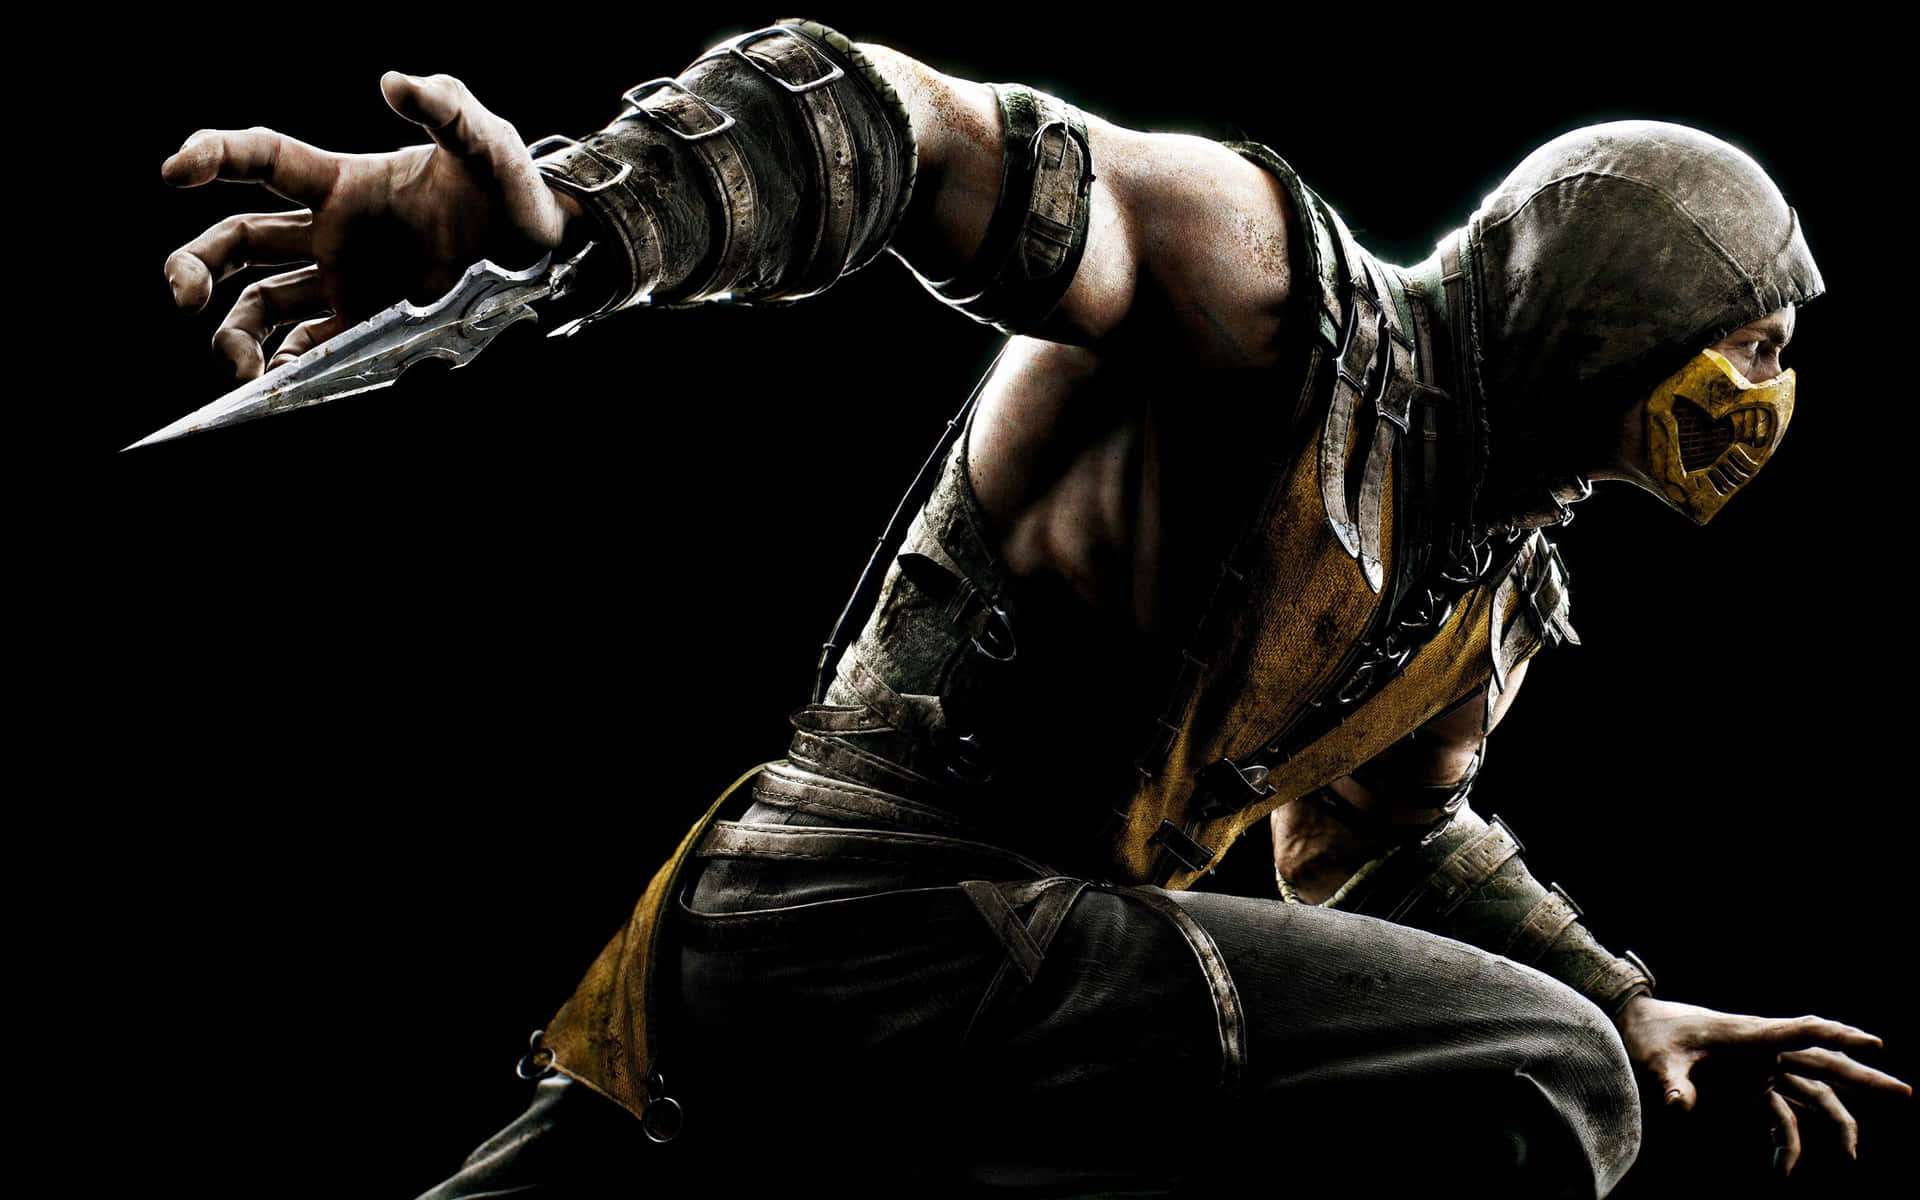 Epic showdown between iconic Mortal Kombat characters Wallpaper